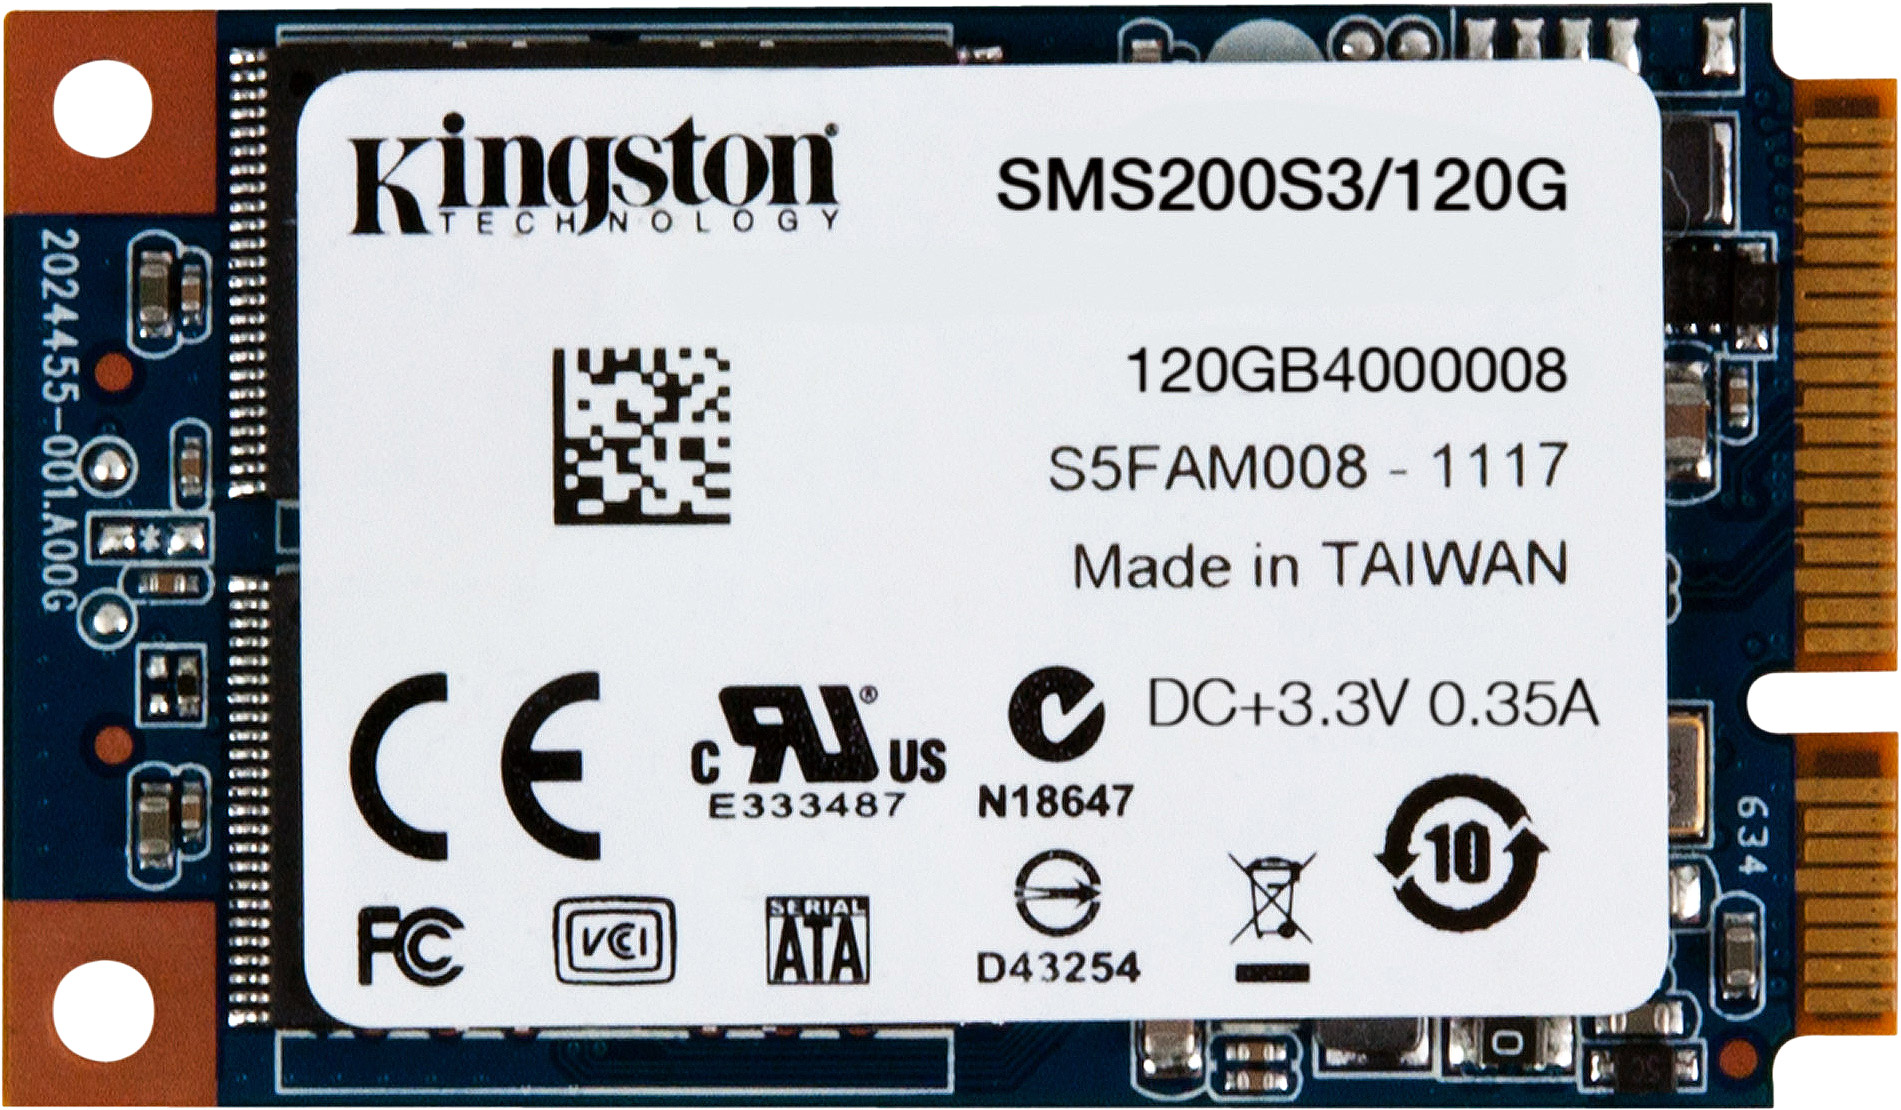 SSD Kingston SSDNow mS200 120GB SMS200S3120G kingspec sata iii 3 0 2 5 64gb mlc ssd цифровой твердотельный накопитель для настольного компьютера и ноутбука